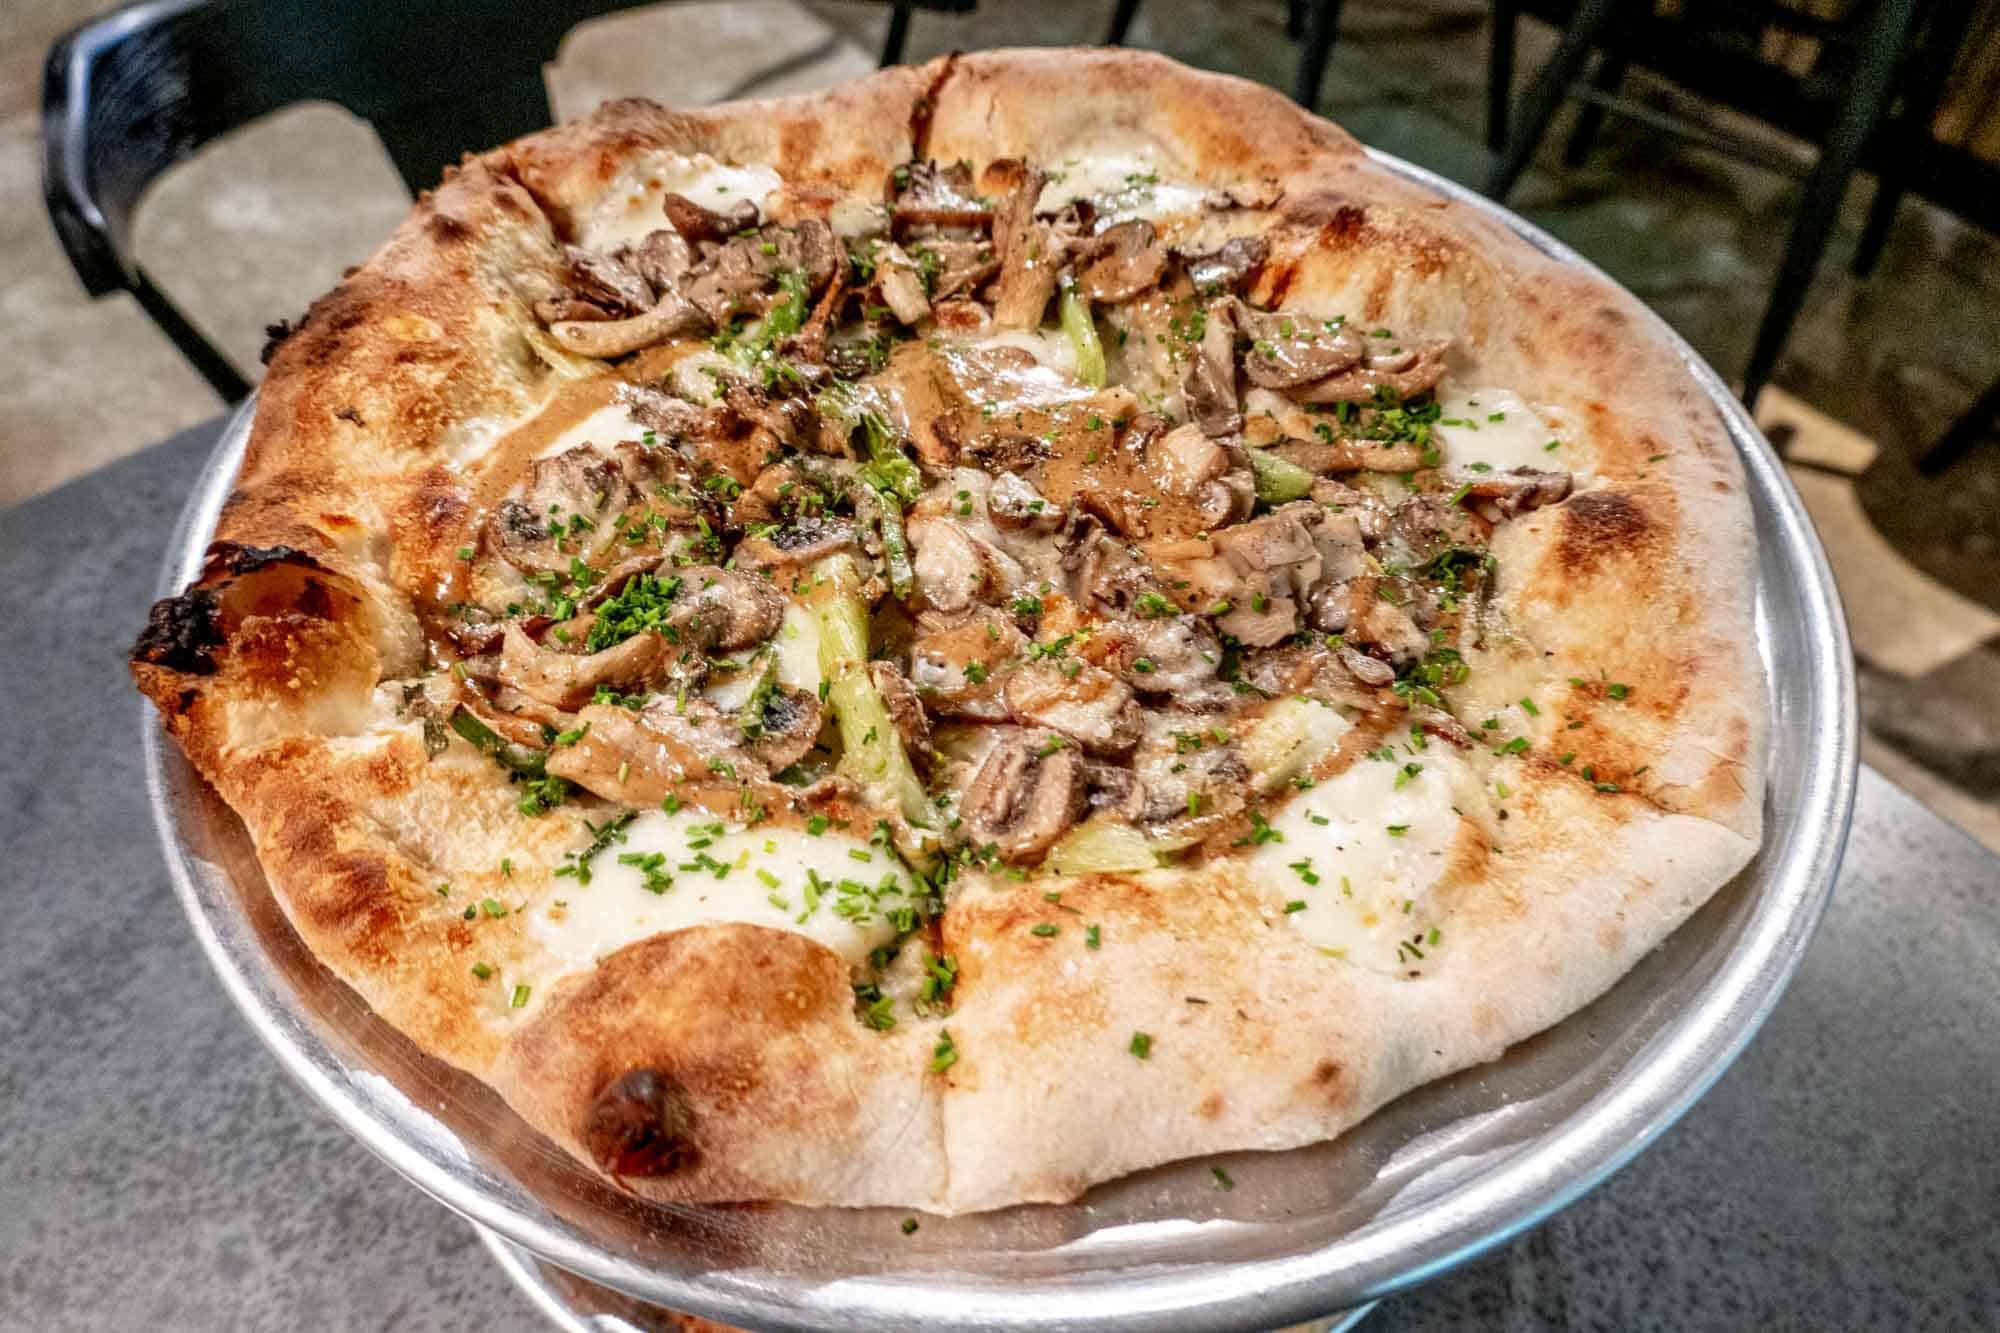 Mushroom pizza on a metal tray